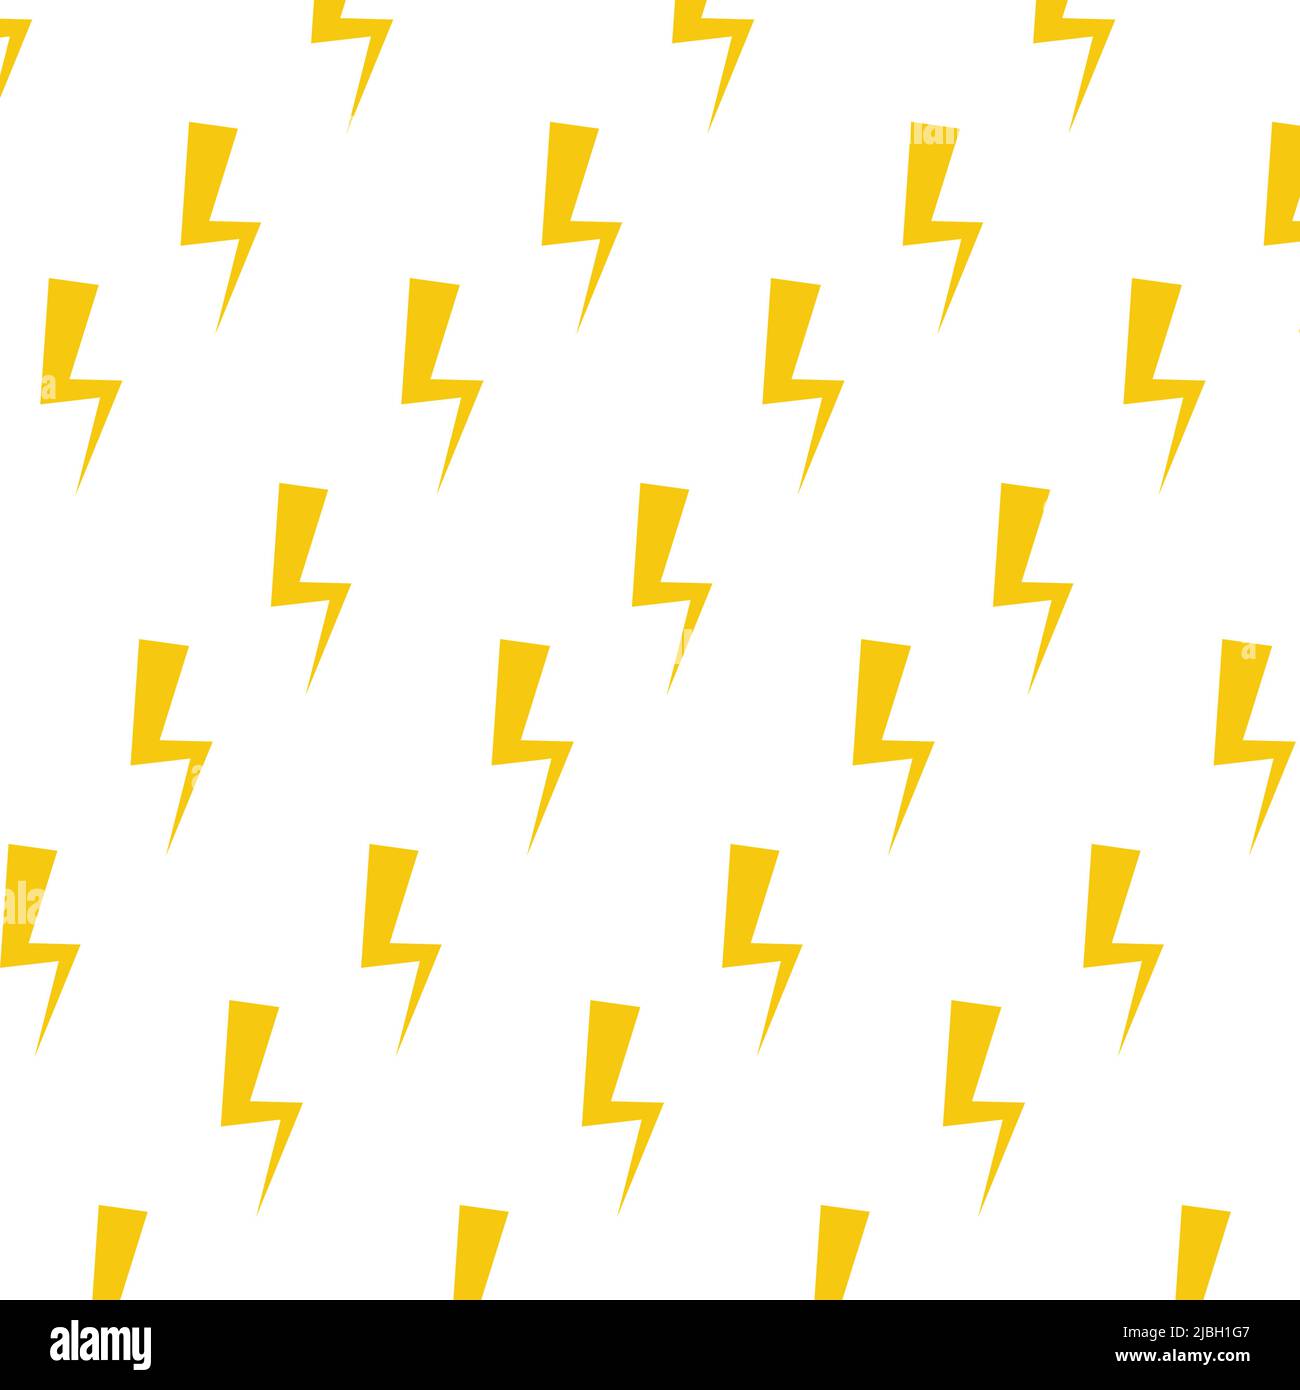 Light thunderbolt seamless pattern, stroke thunderstorm background. Vector, illustration. yellow stylized zippers, wallpaper for phone with hunderstor Stock Vector